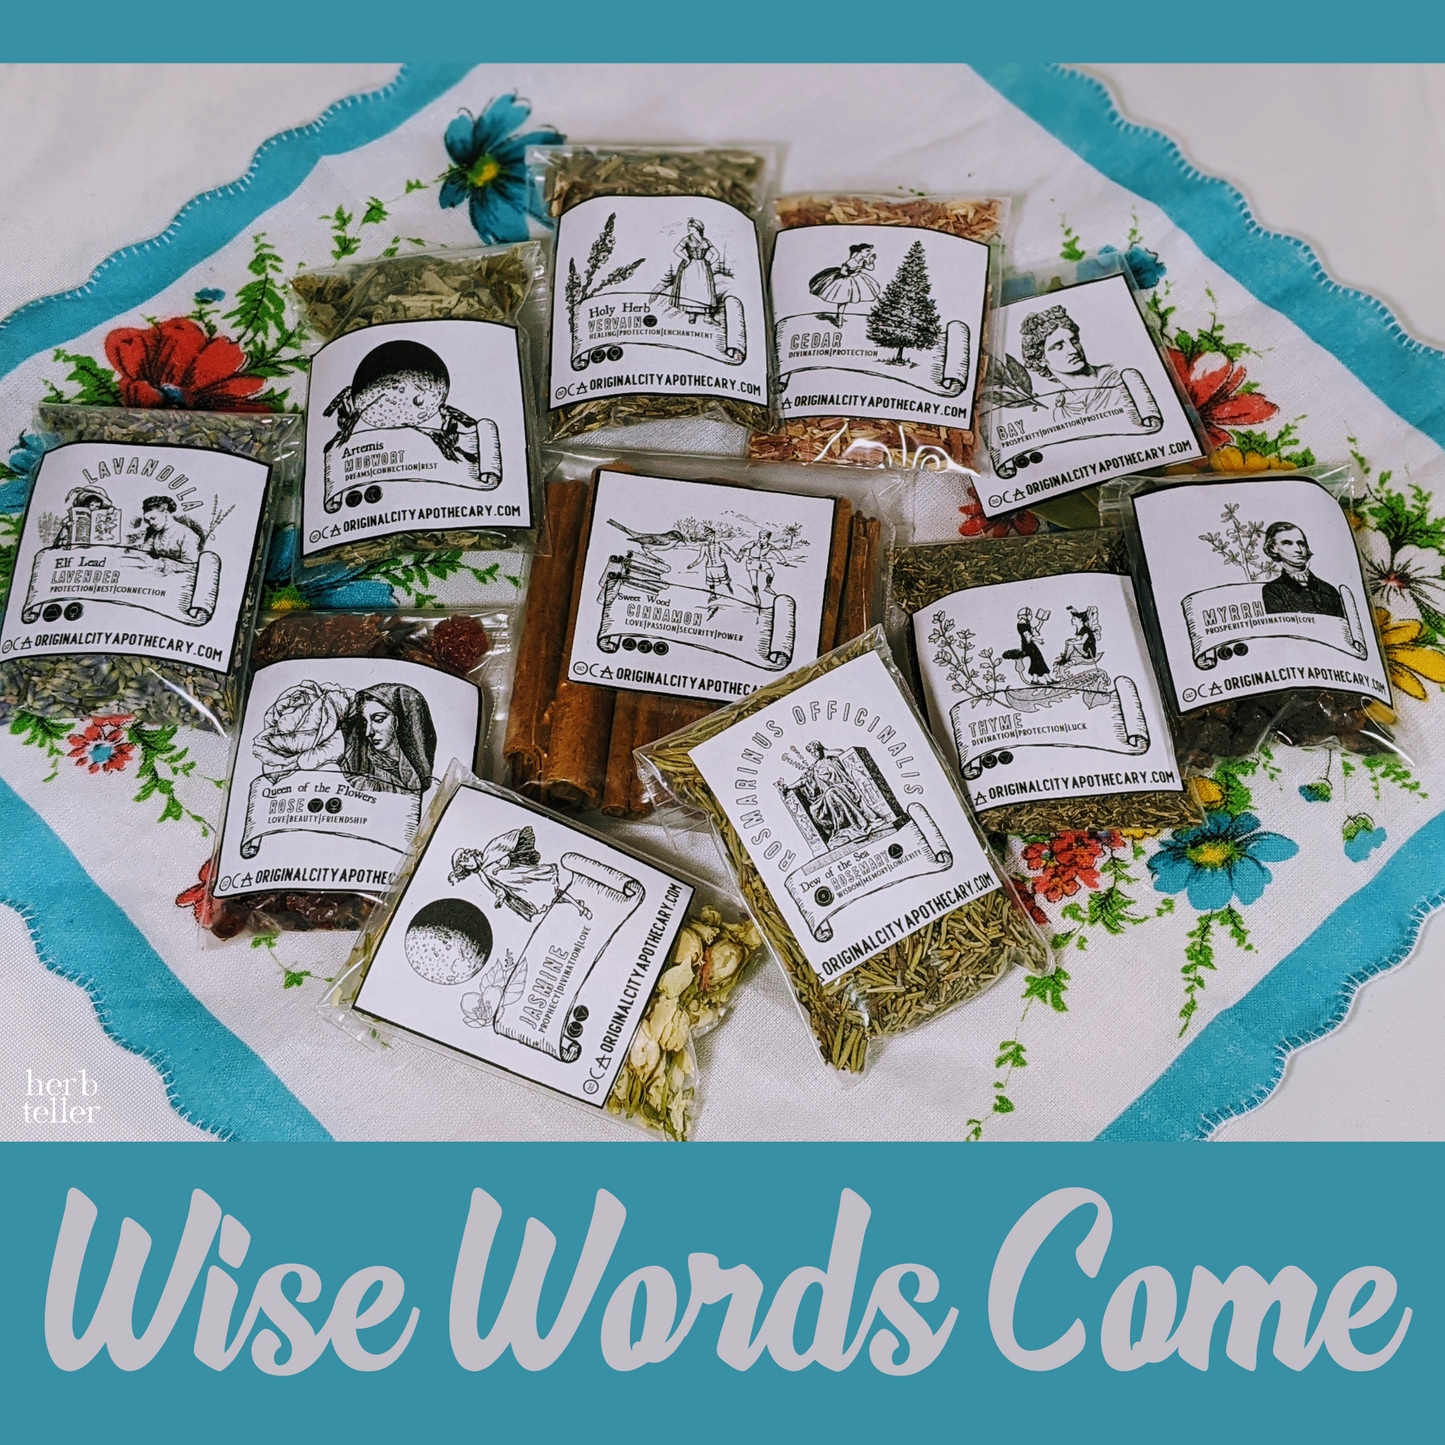 Ceremoment: Wise Words Come (Tea/Incense/Ritual/Oil Set)